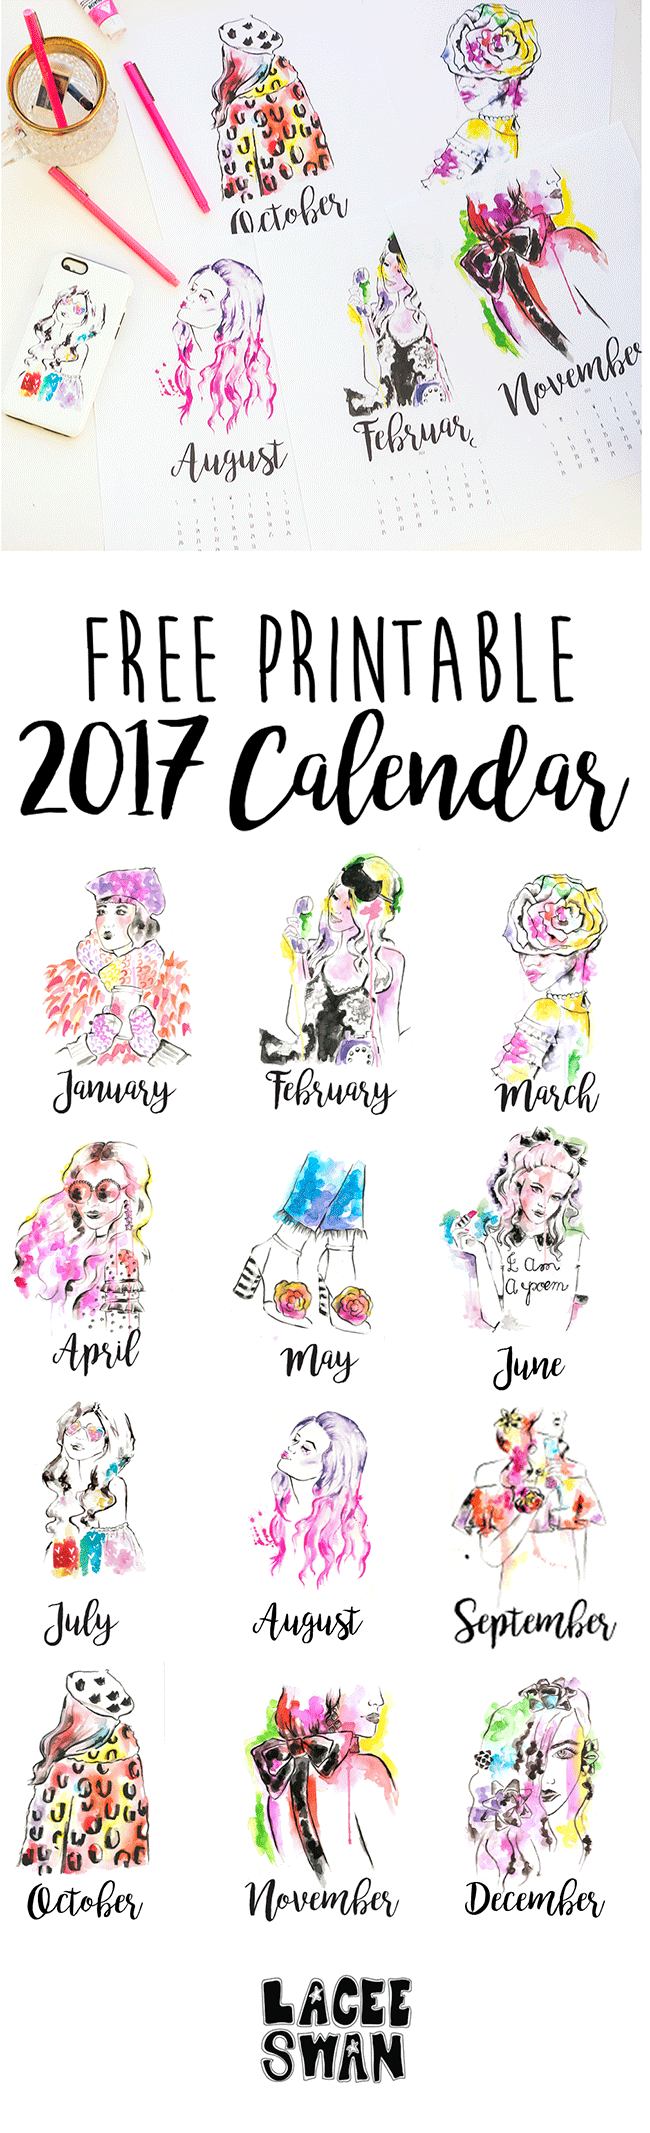 pinterest-free-printable-calendar-2017